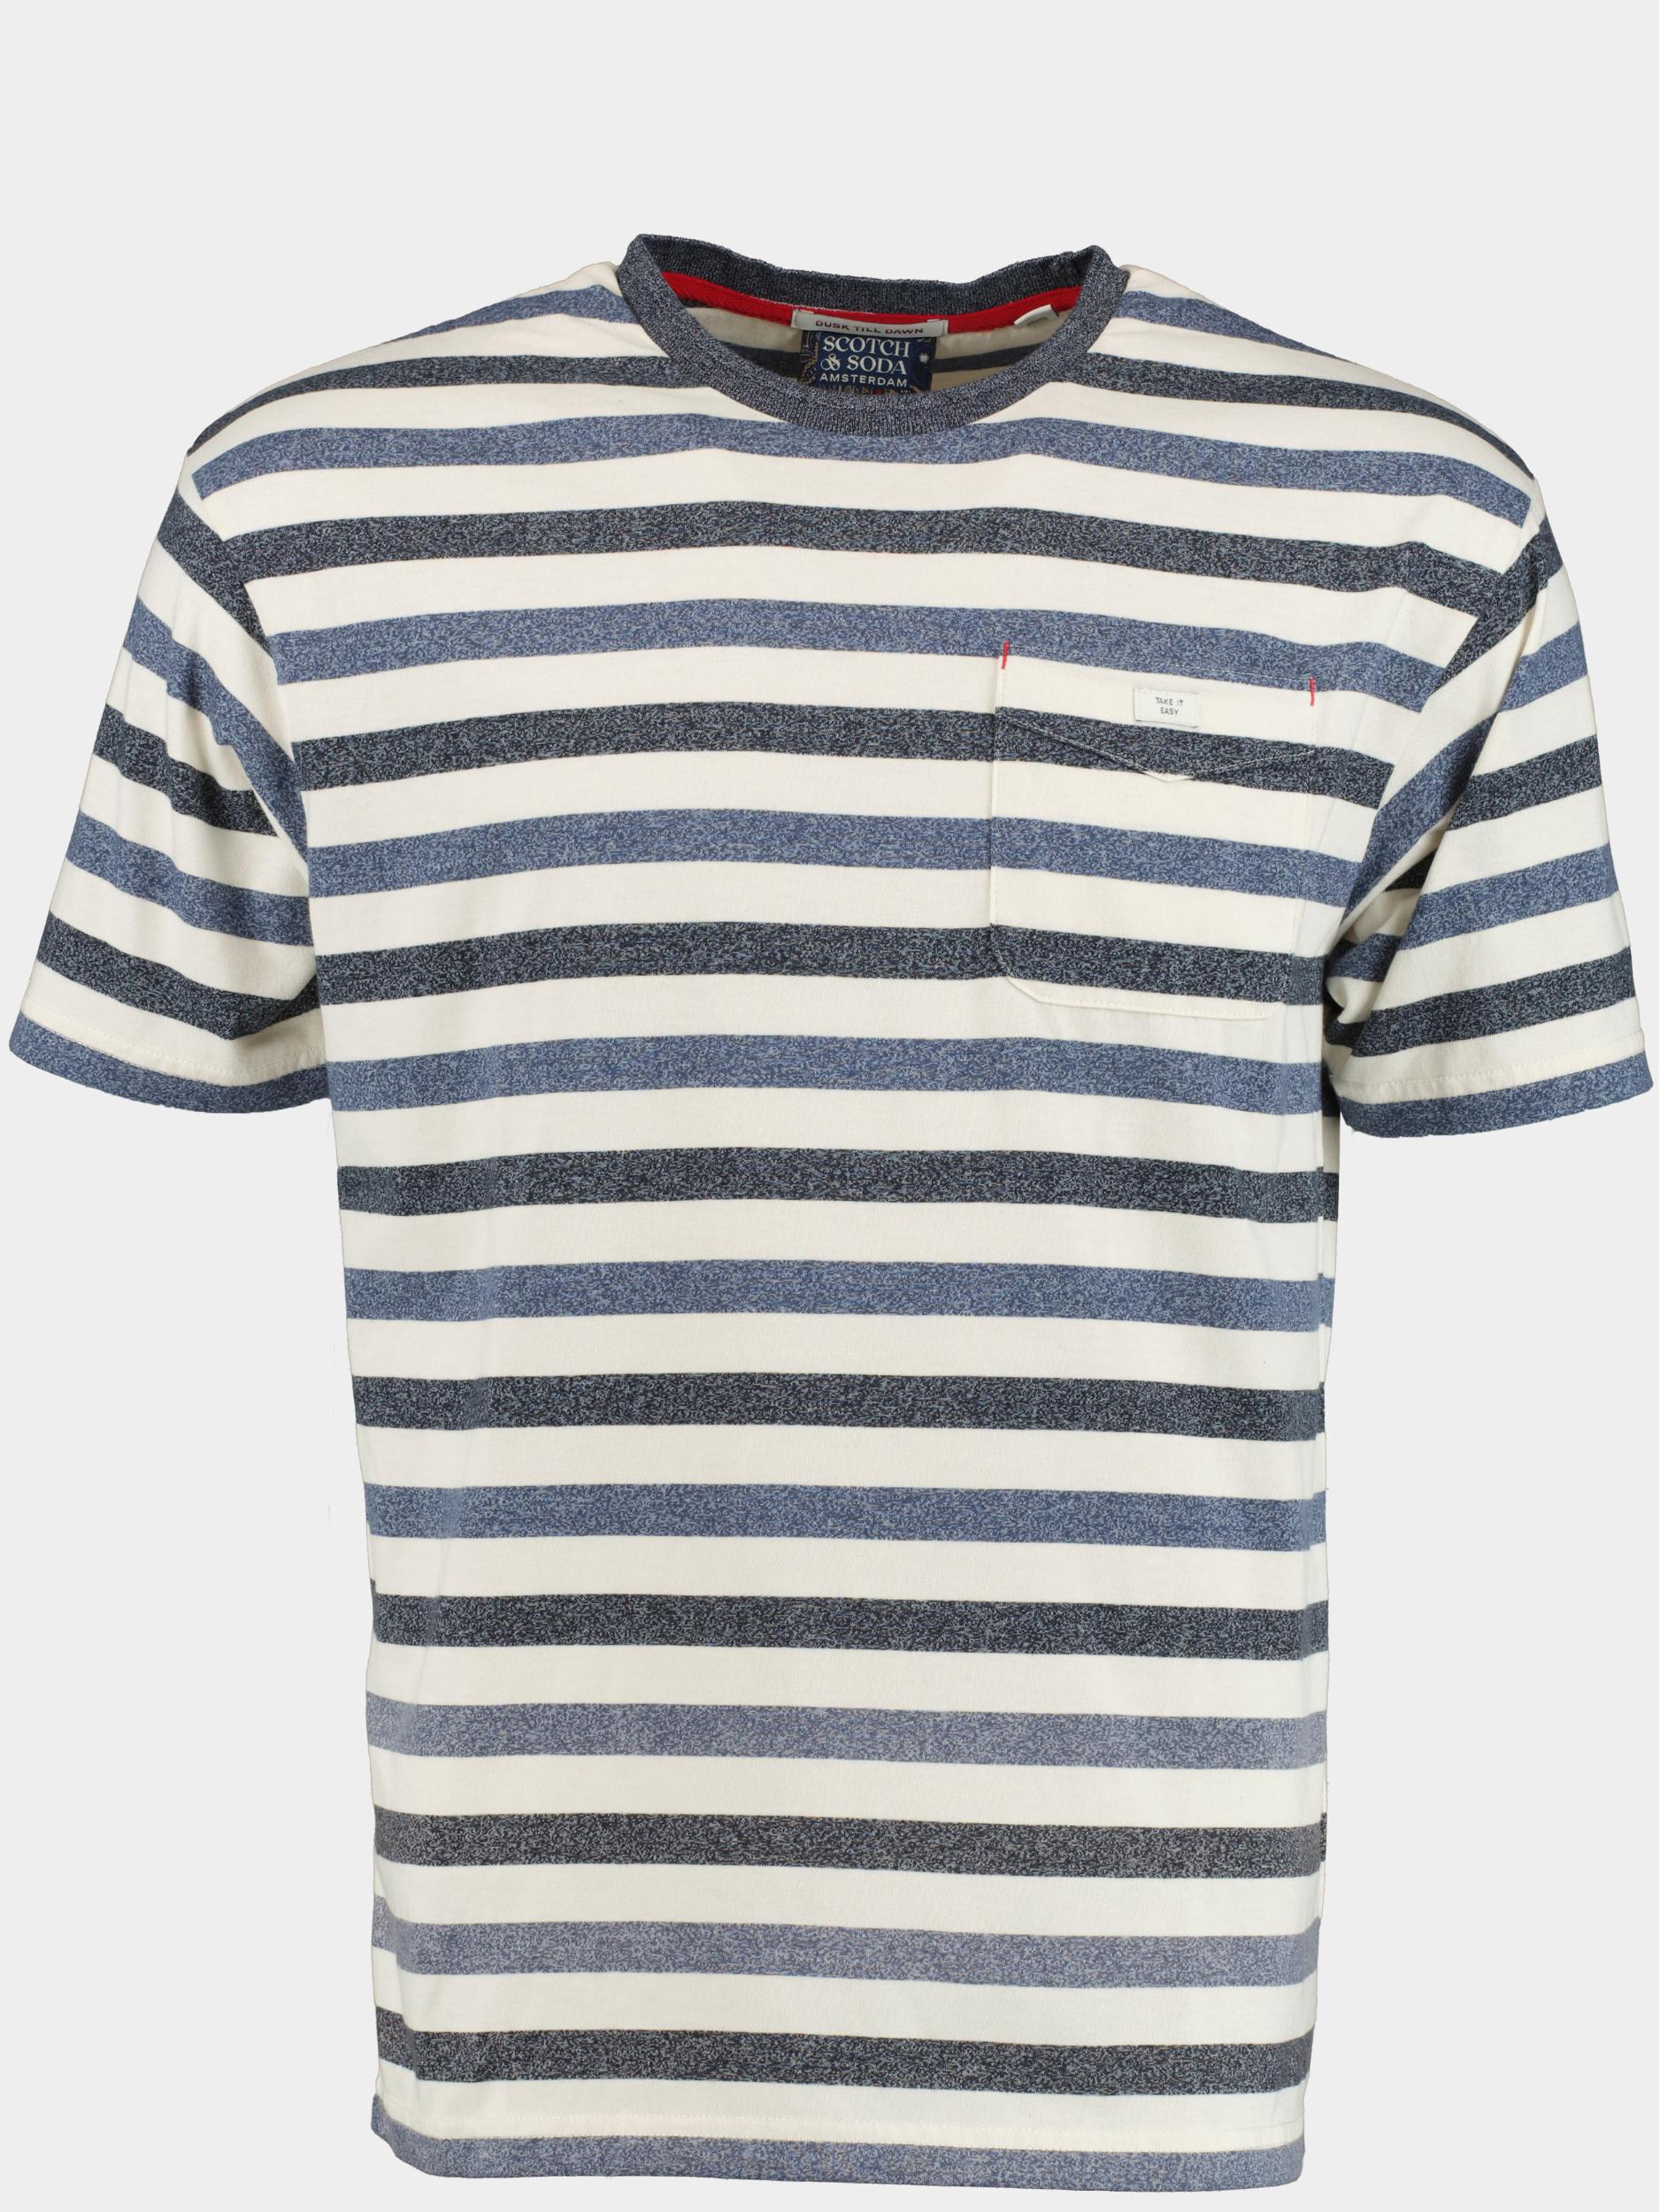 Scotch & Soda T-shirt korte mouw Blauw Washed yarn dye stripe T-shirt 174168/6057